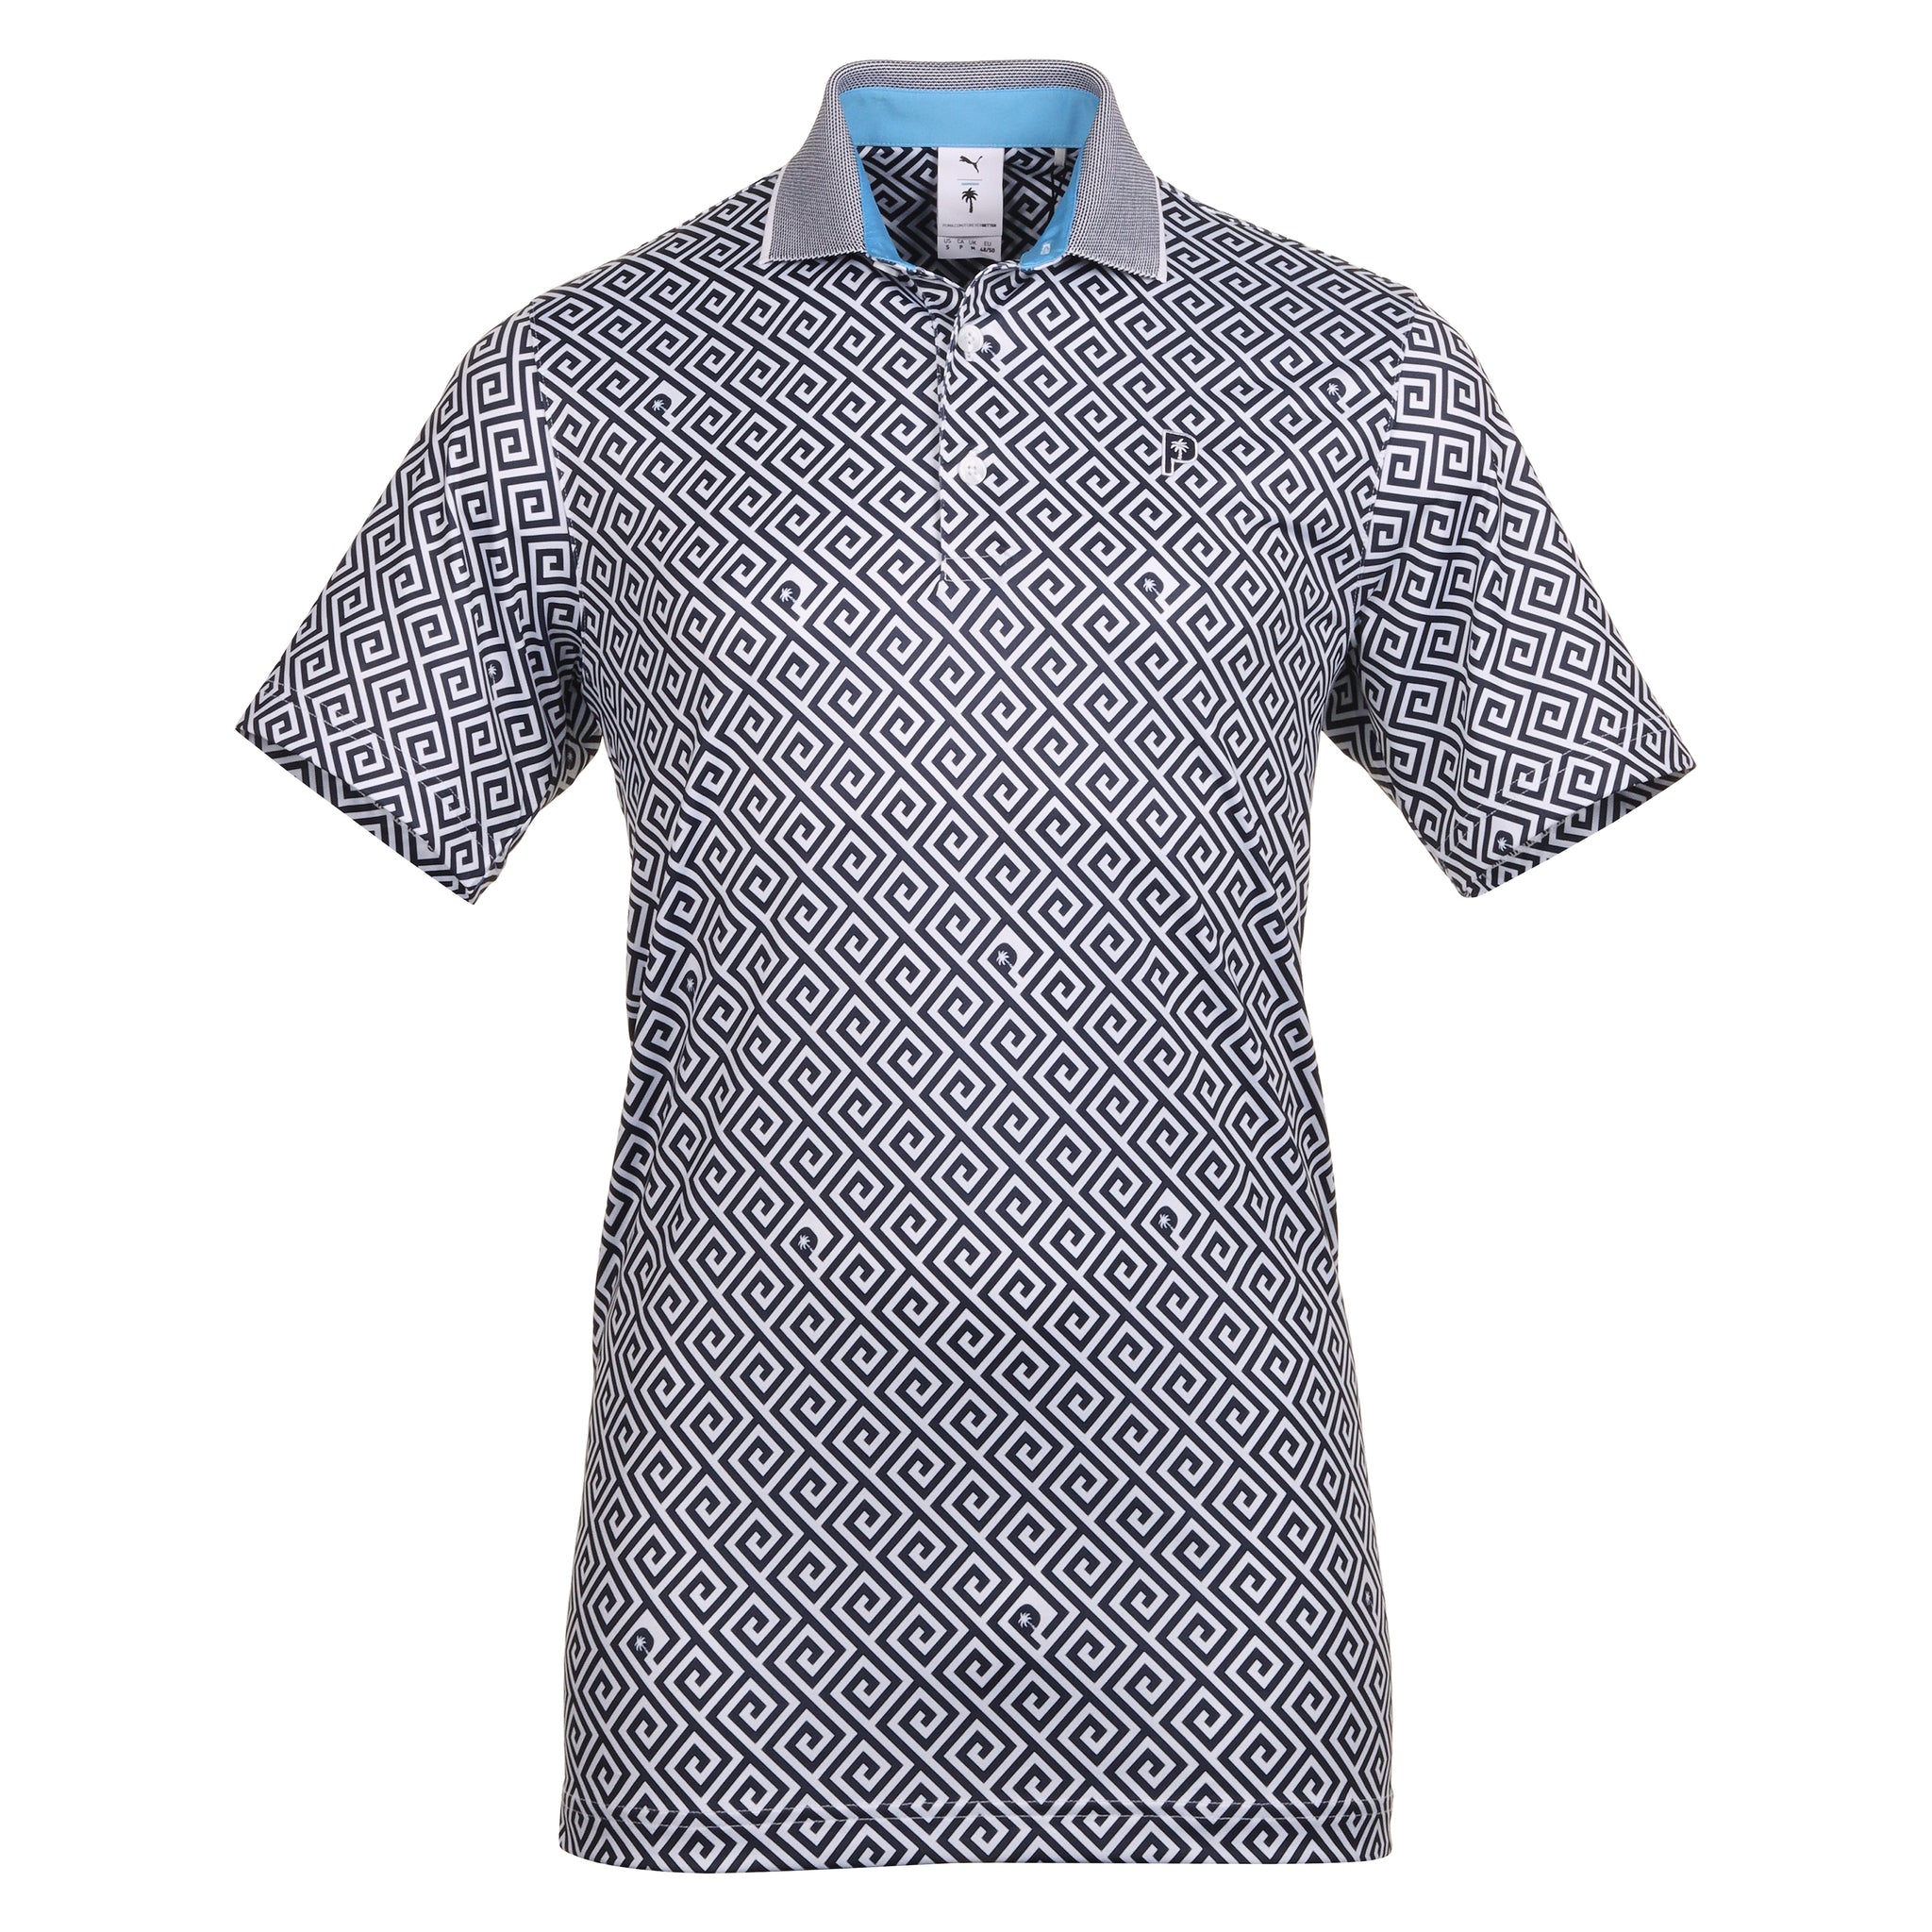 puma-golf-x-ptc-resort-shirt-623963-deep-navy-white-glow-01